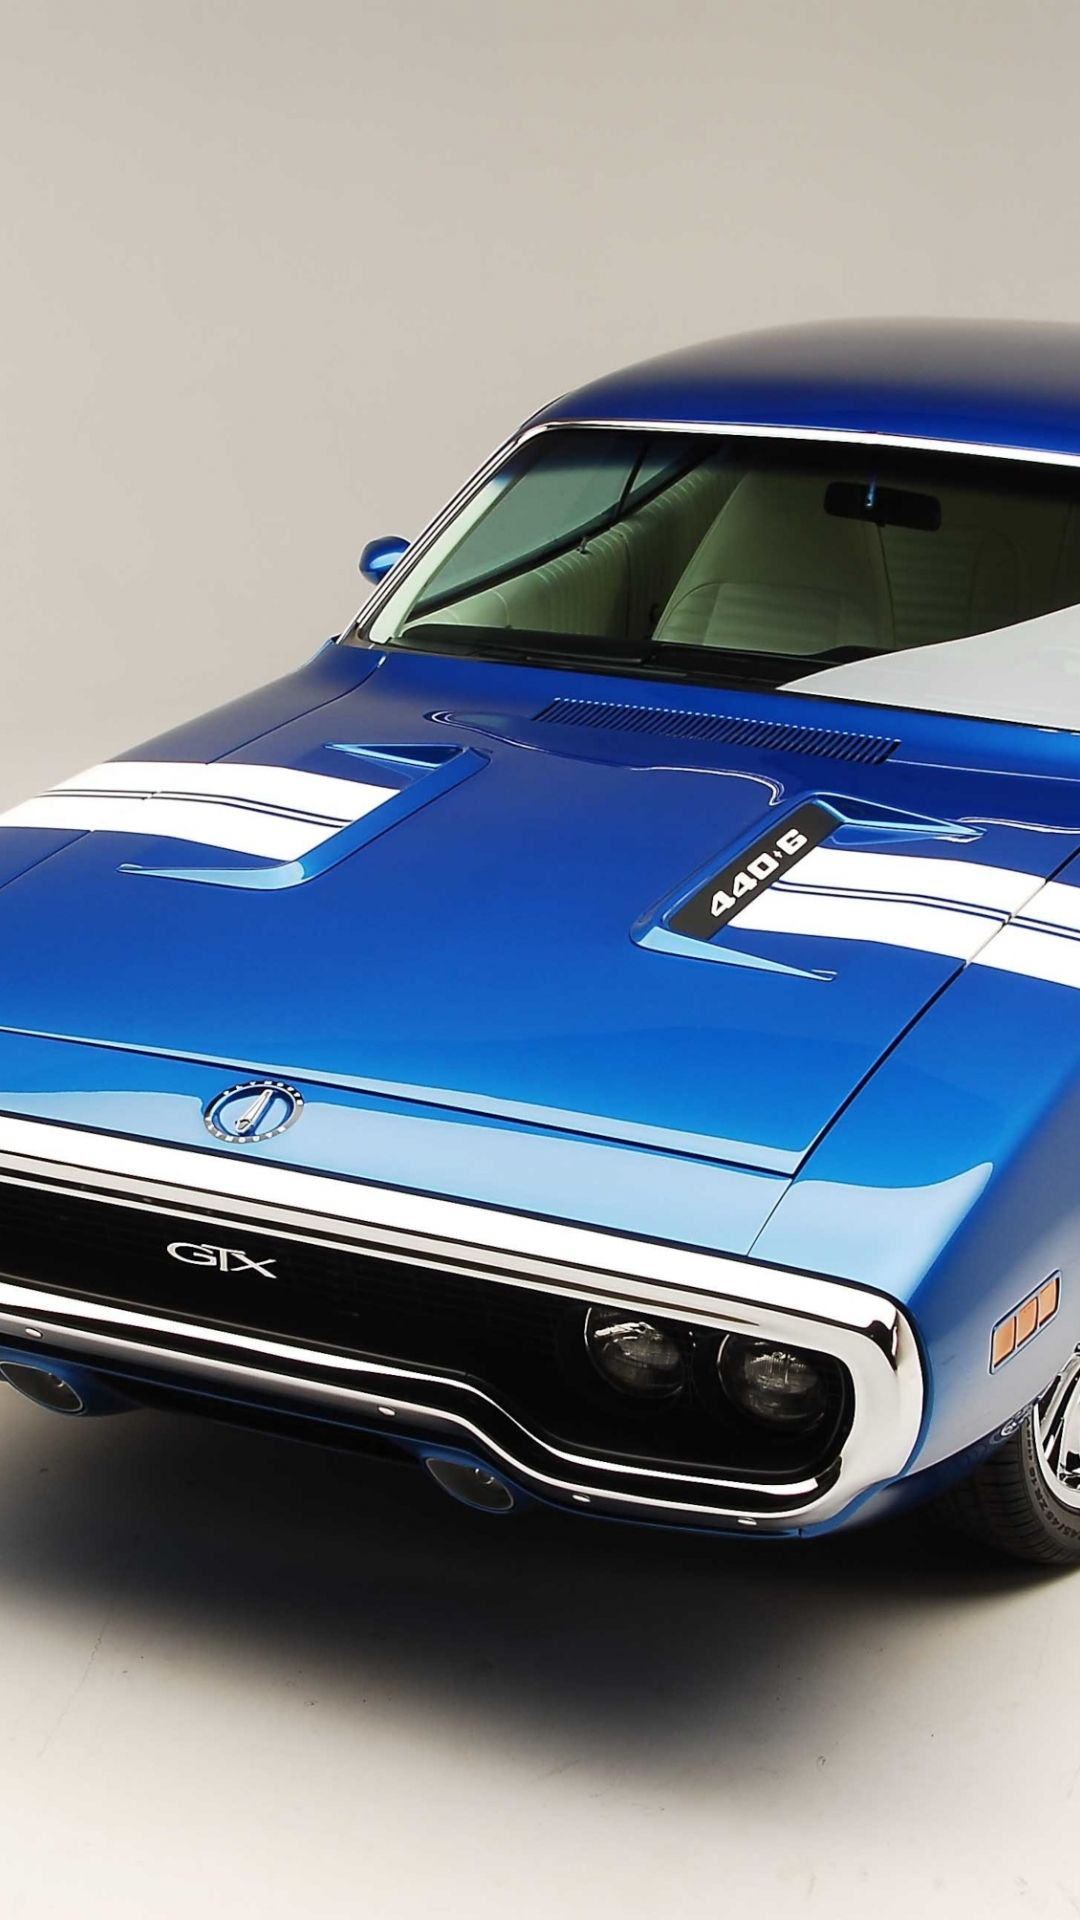 1080x1920 Blue, Plymouth GTX, muscle car wallpaper | Plymouth gtx, Muscle cars, Car wallpapers